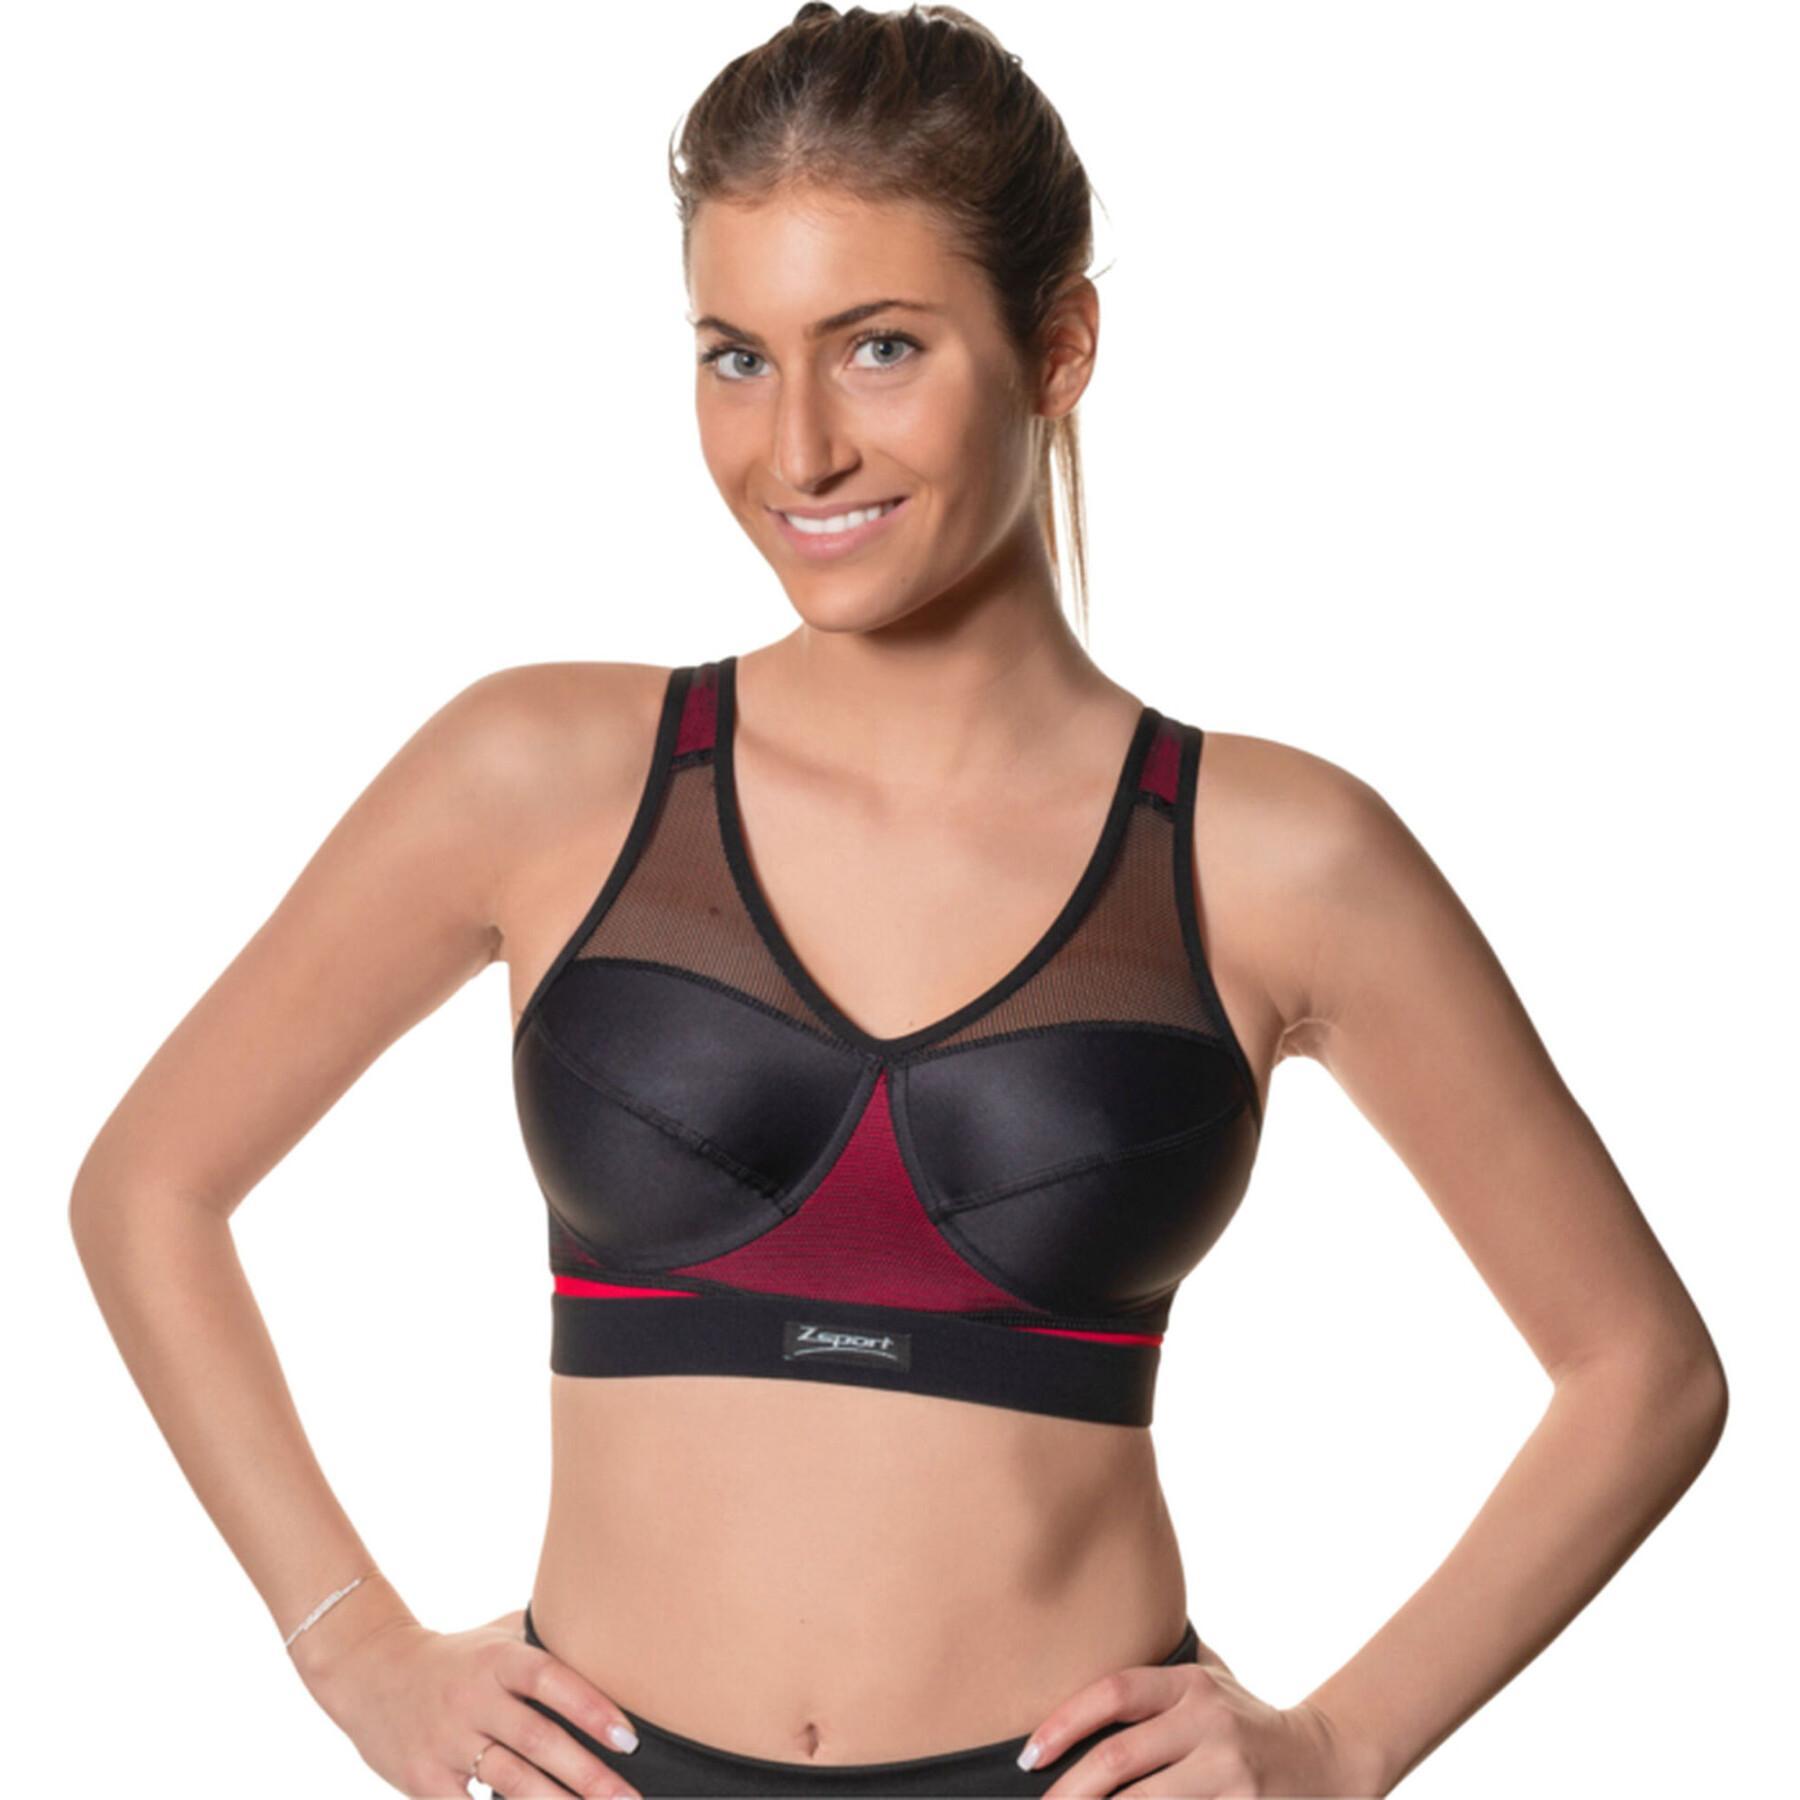 Women's bra ZSport Fitline Vitality - Bras - Women's clothing - Fitness